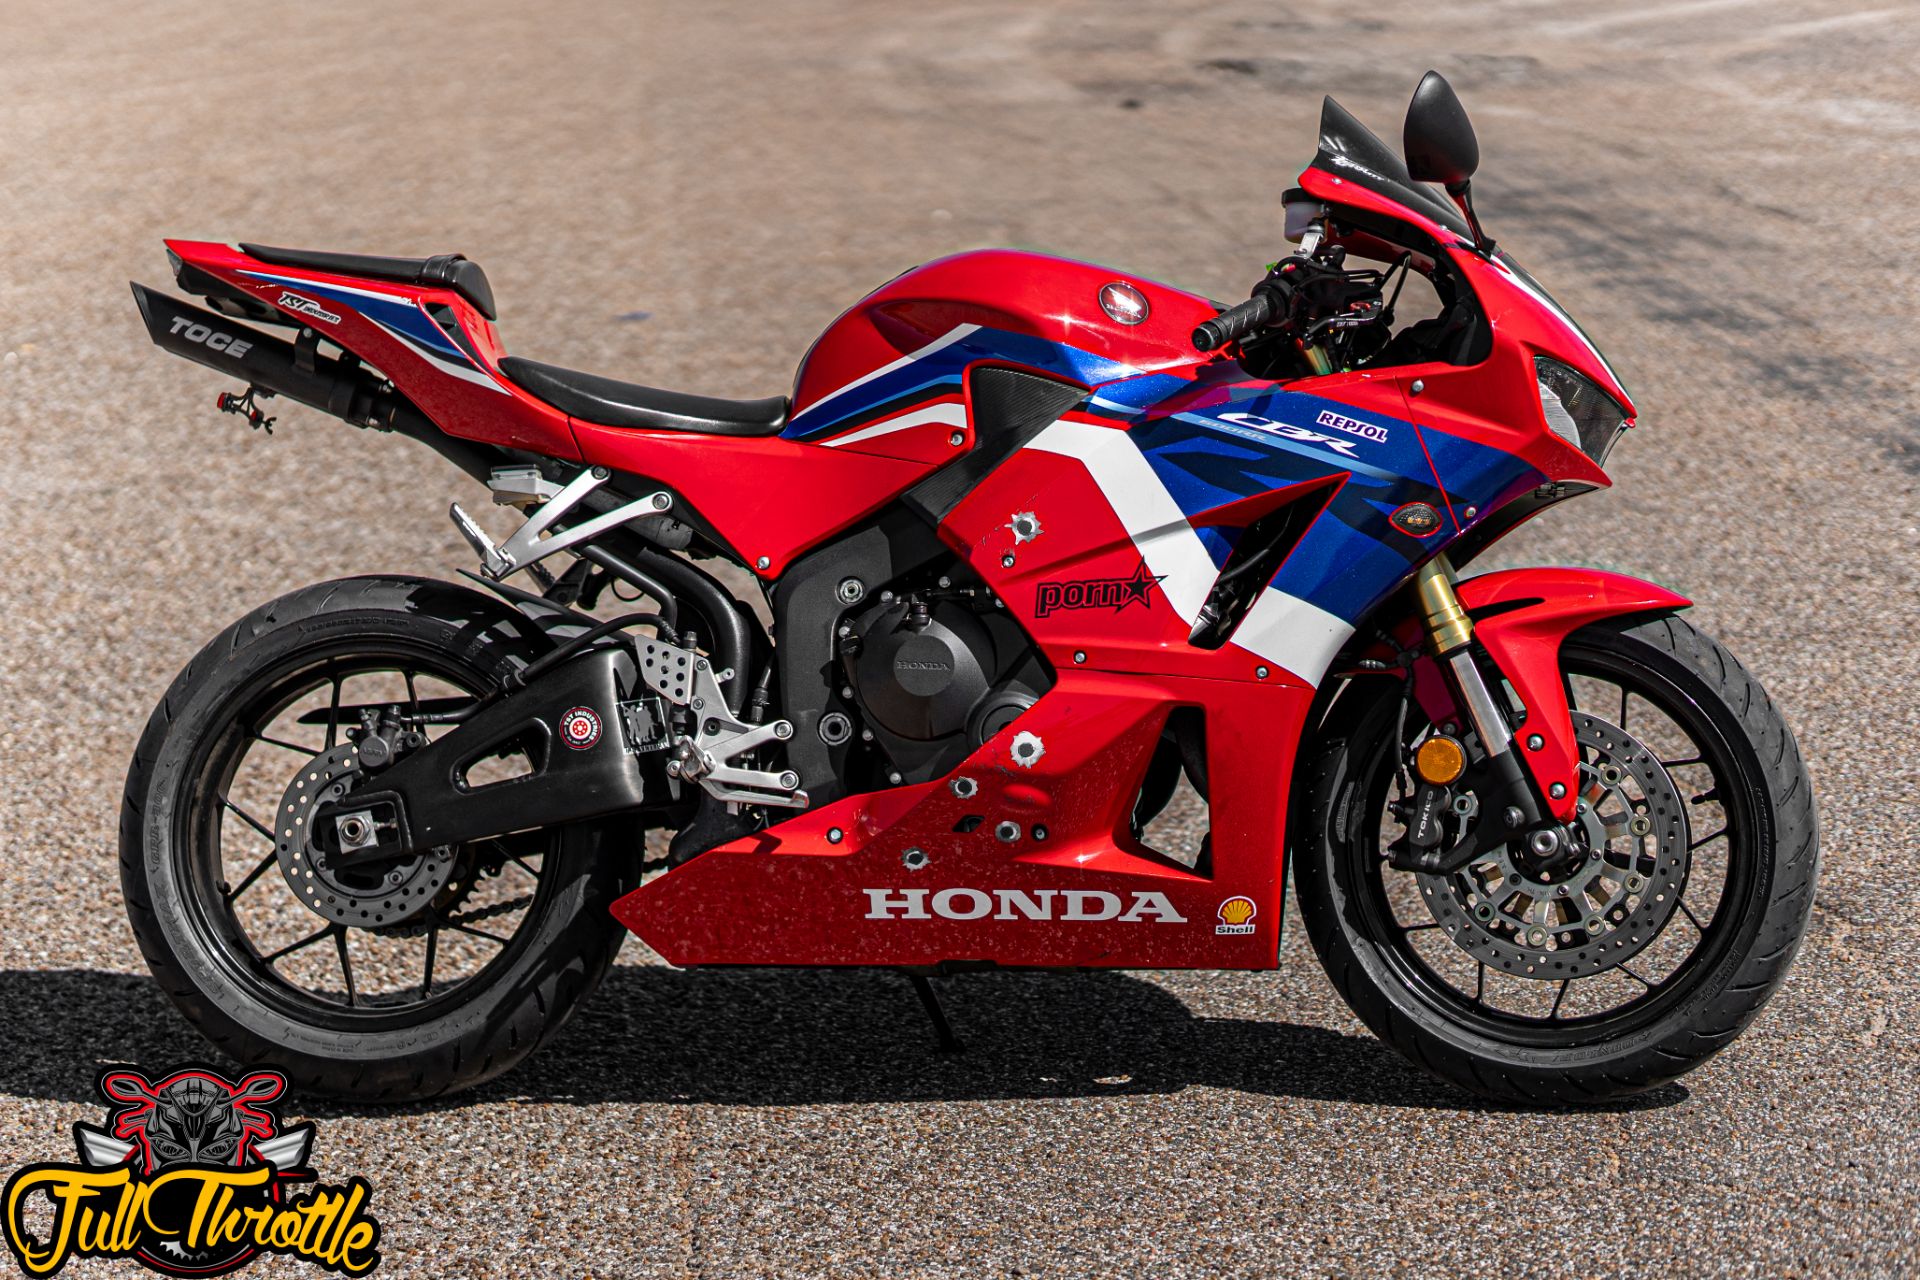 2021 Honda CBR600RR in Houston, Texas - Photo 2